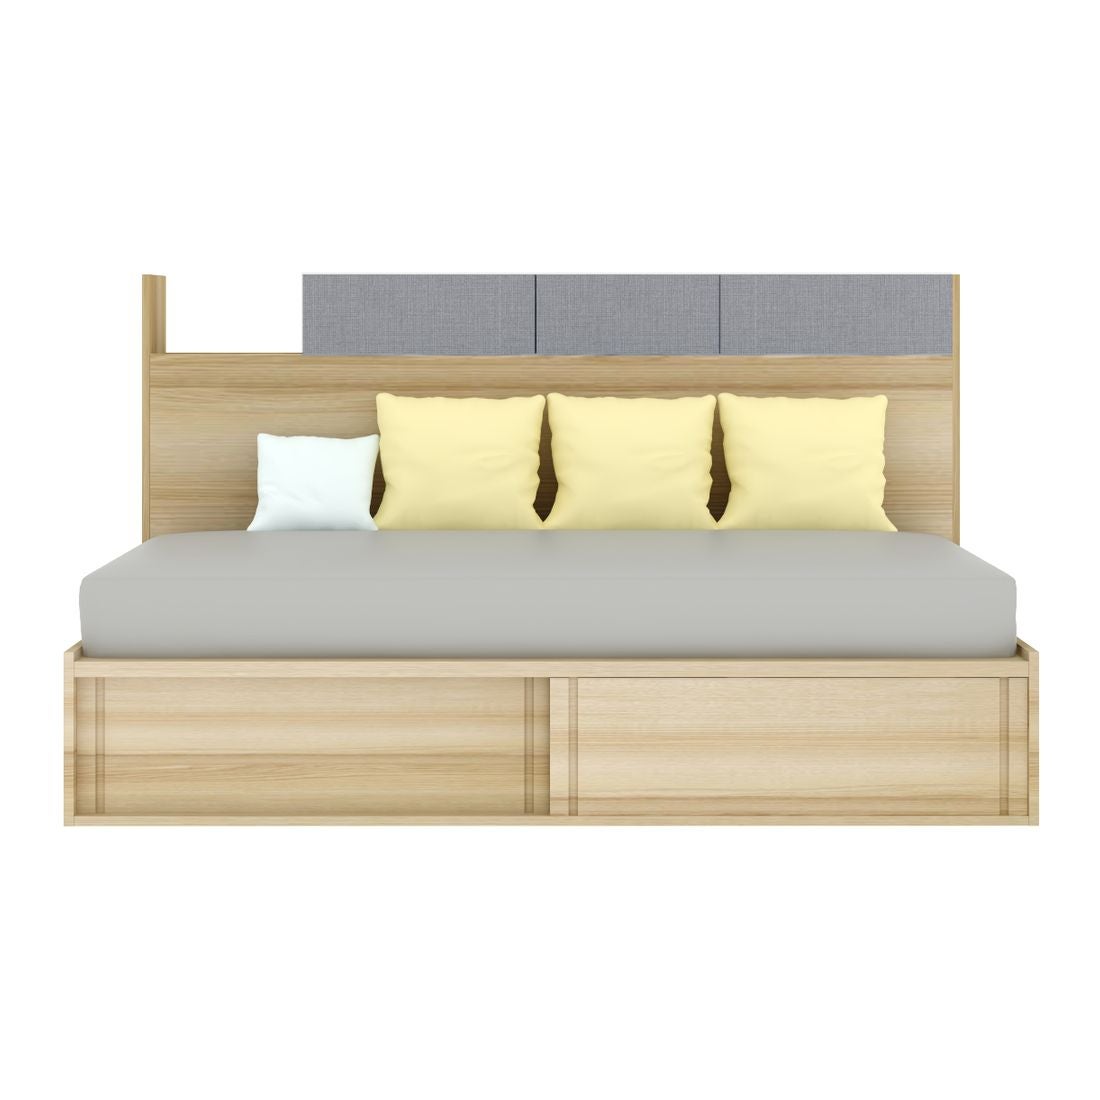 19140453-bricko-mattress-bedding-living-room-sofas-01